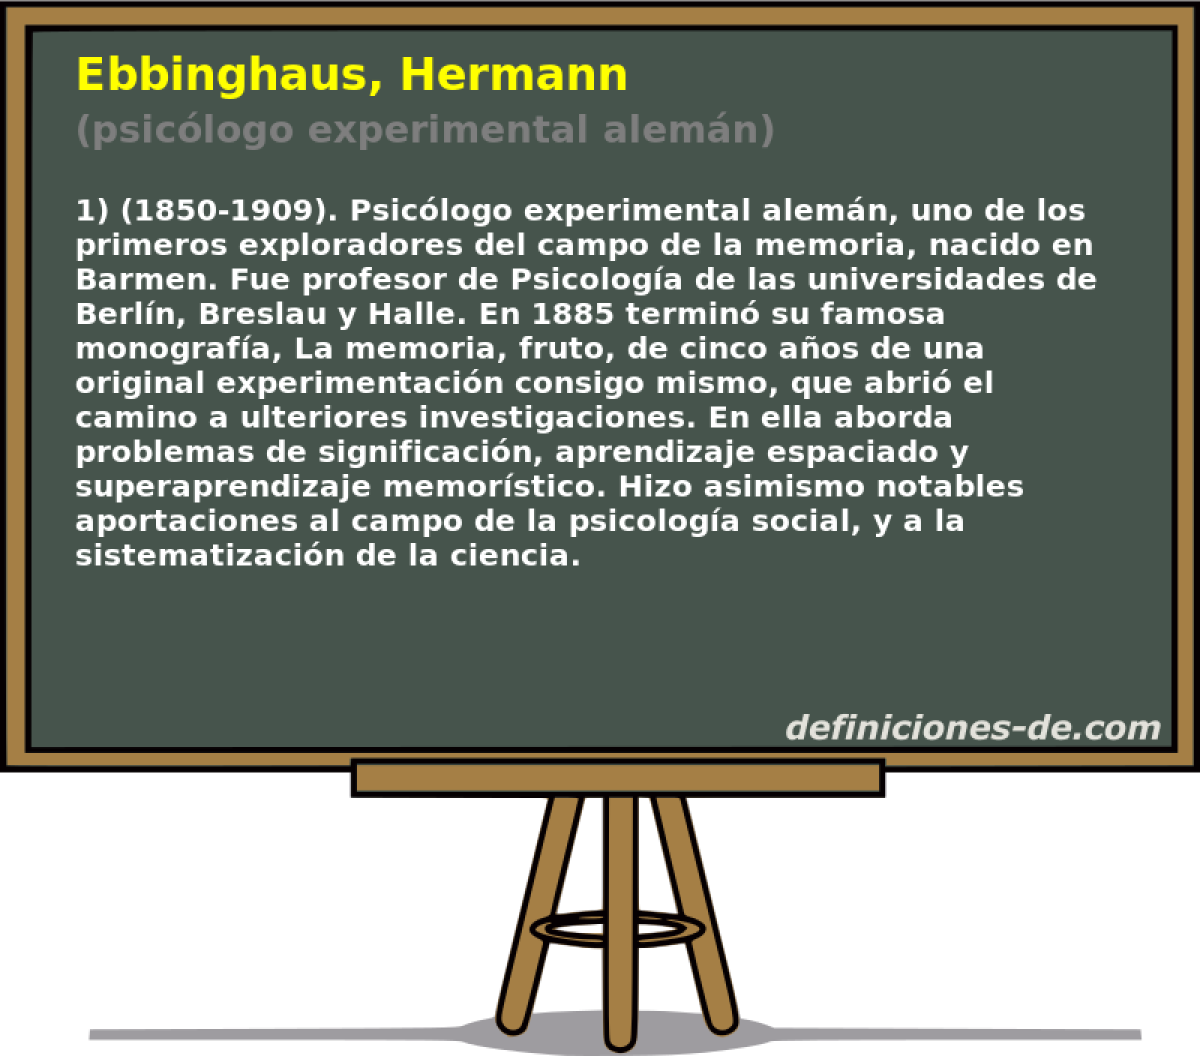 Ebbinghaus, Hermann (psiclogo experimental alemn)